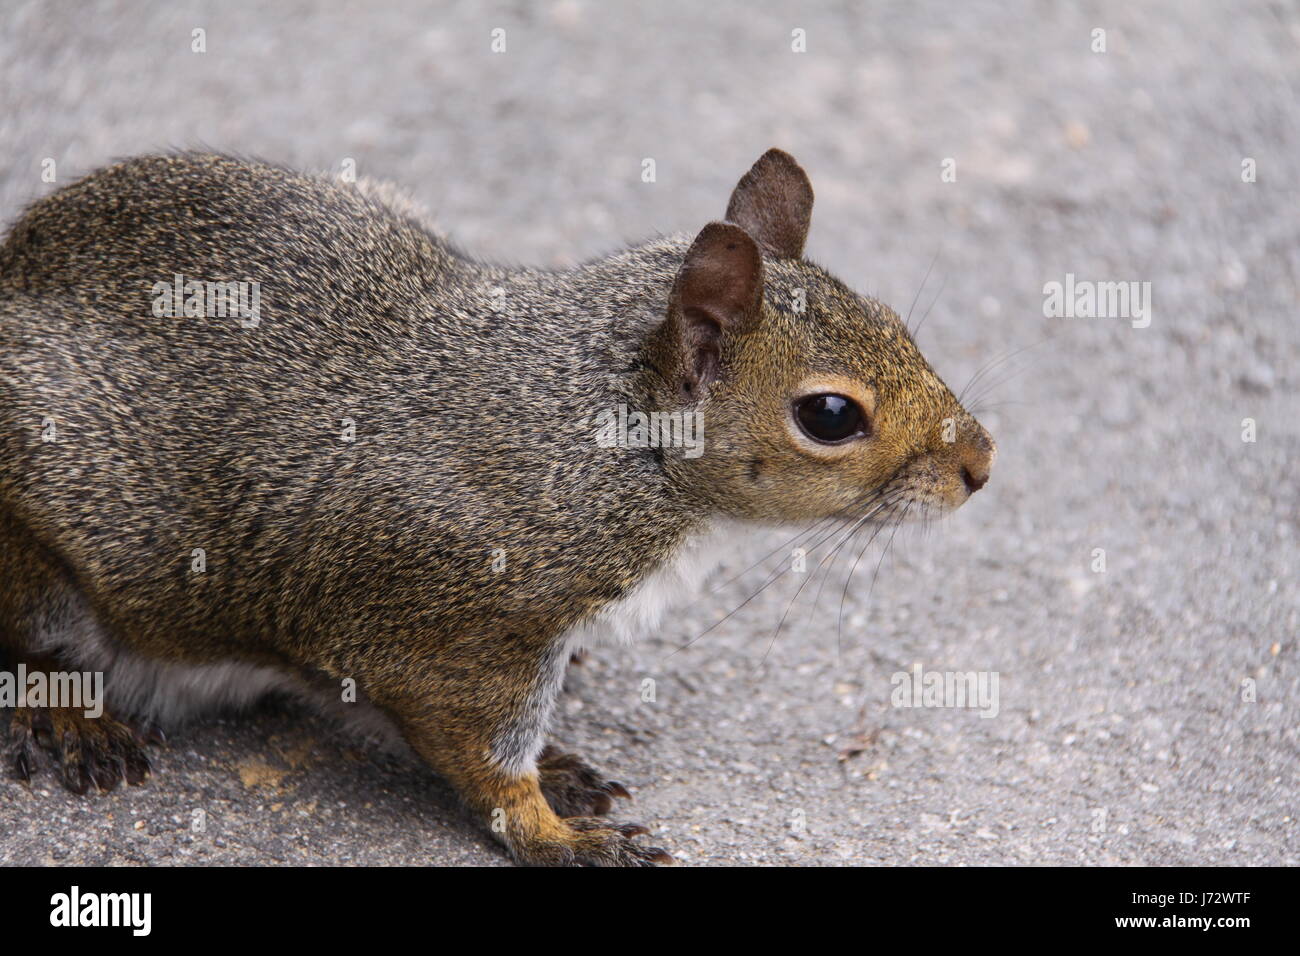 squirrel in close Stock Photo